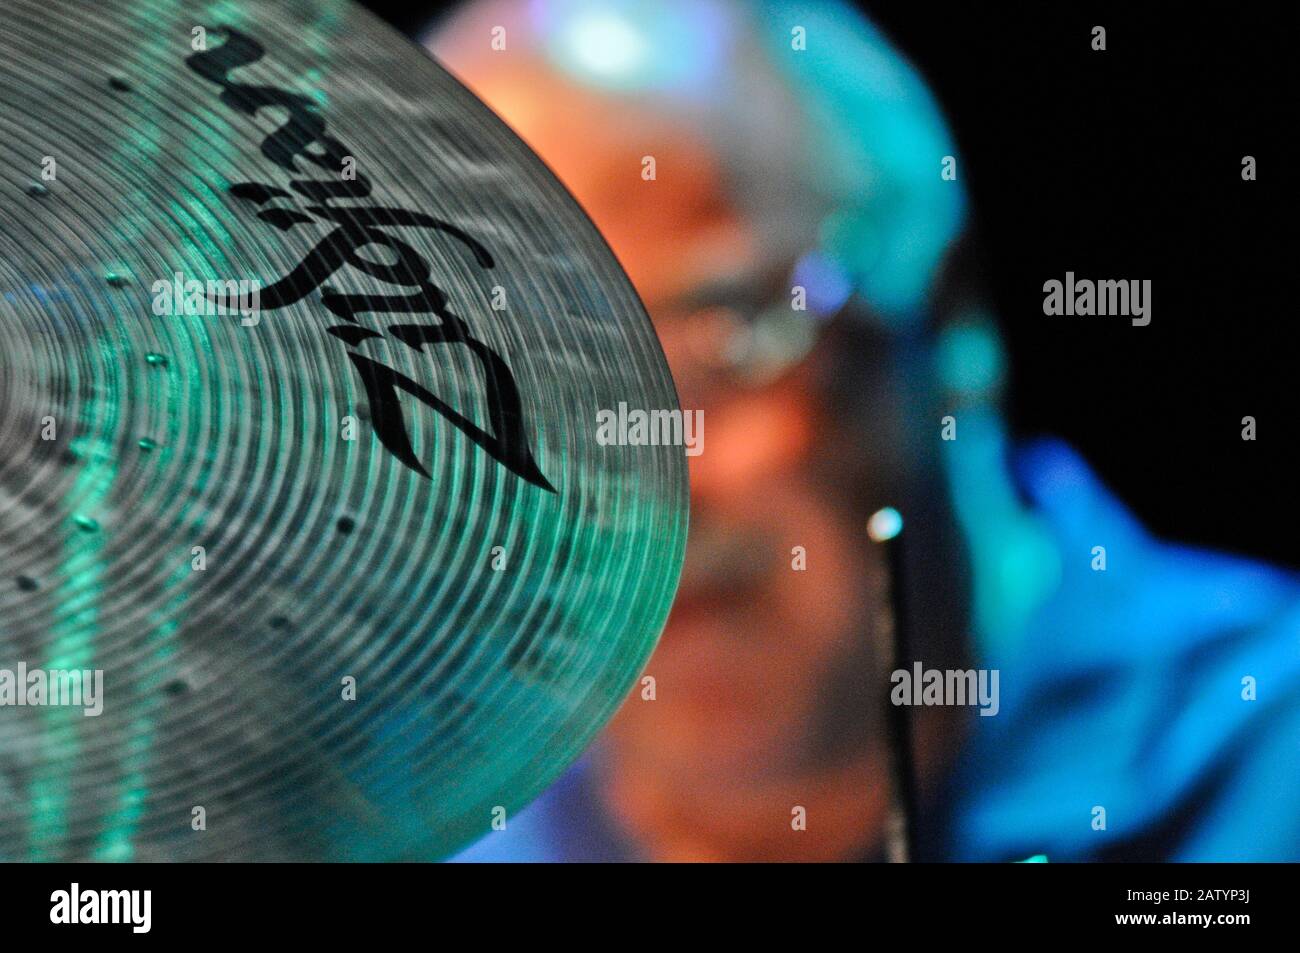 Zildjian cymbals, played live by jazz drummer Peter Erskine Stock Photo